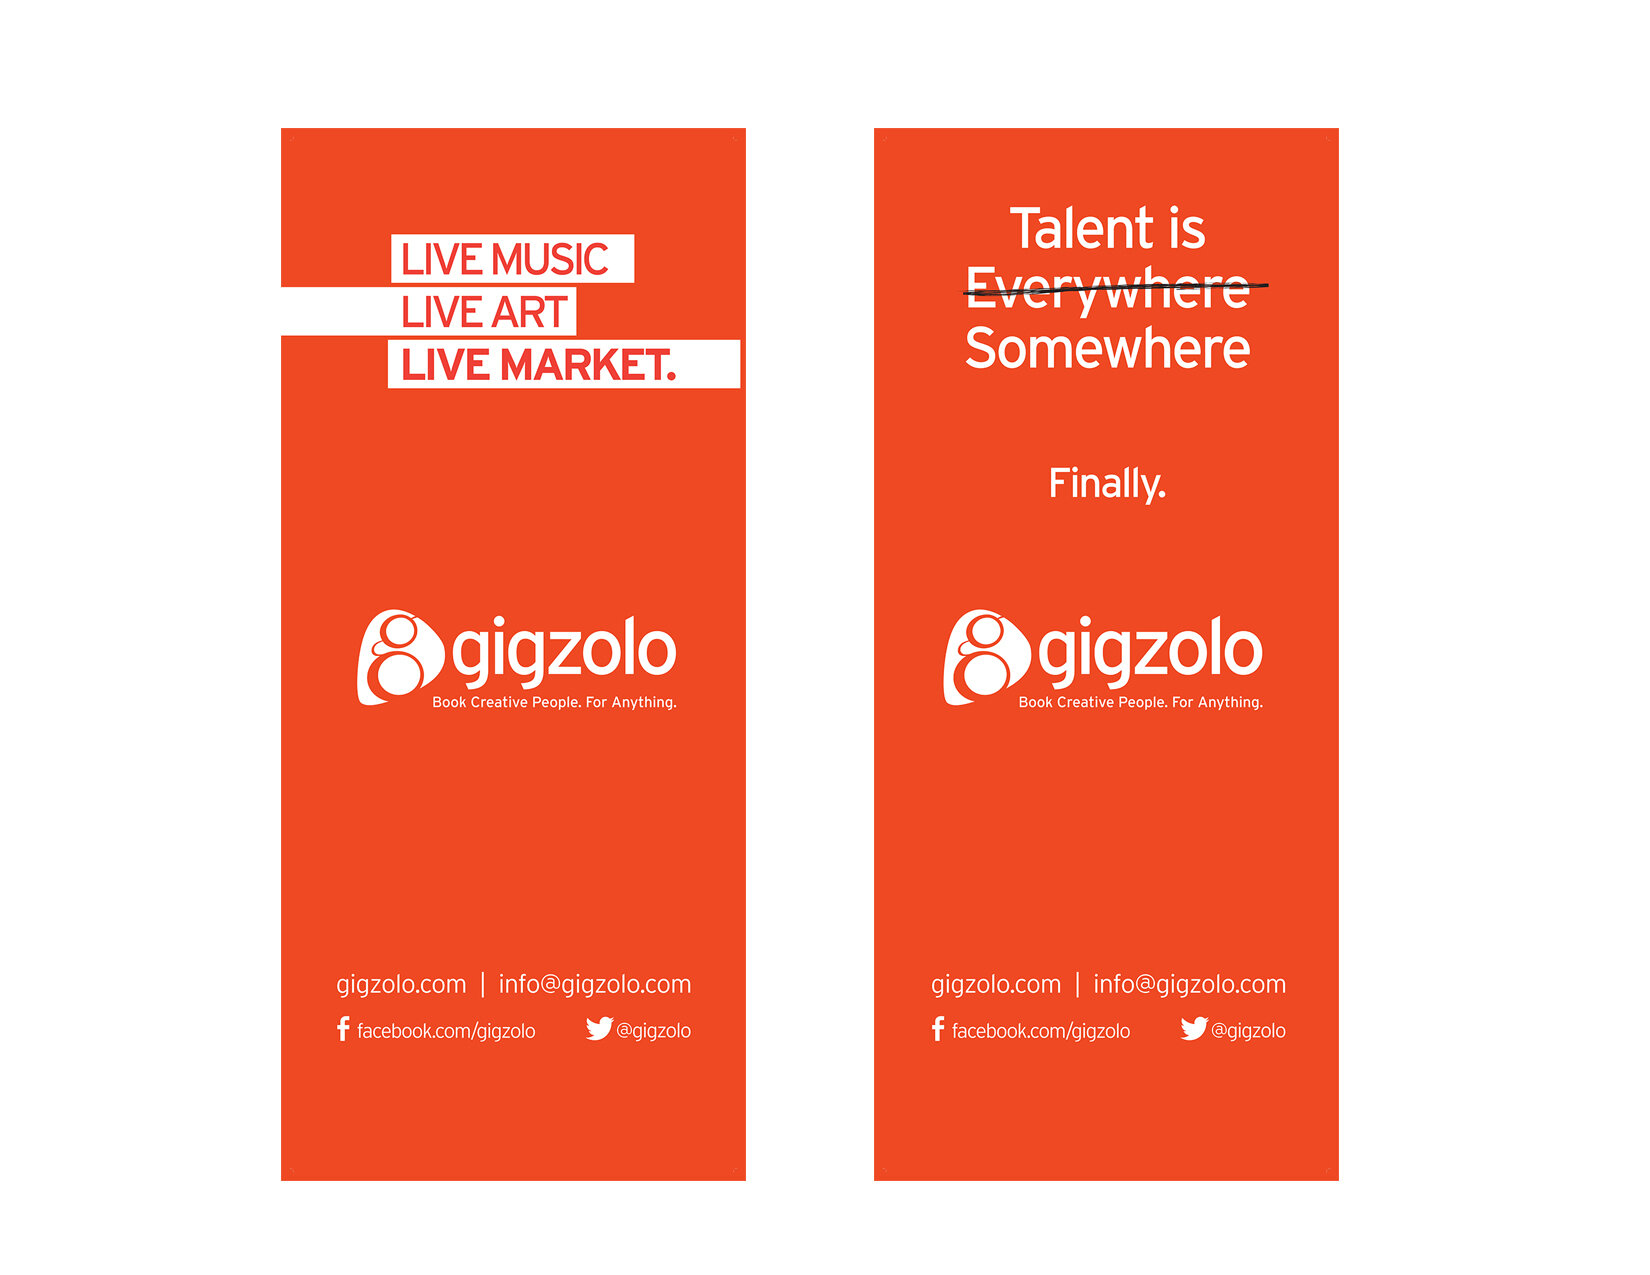 gigzolo-banners.jpg